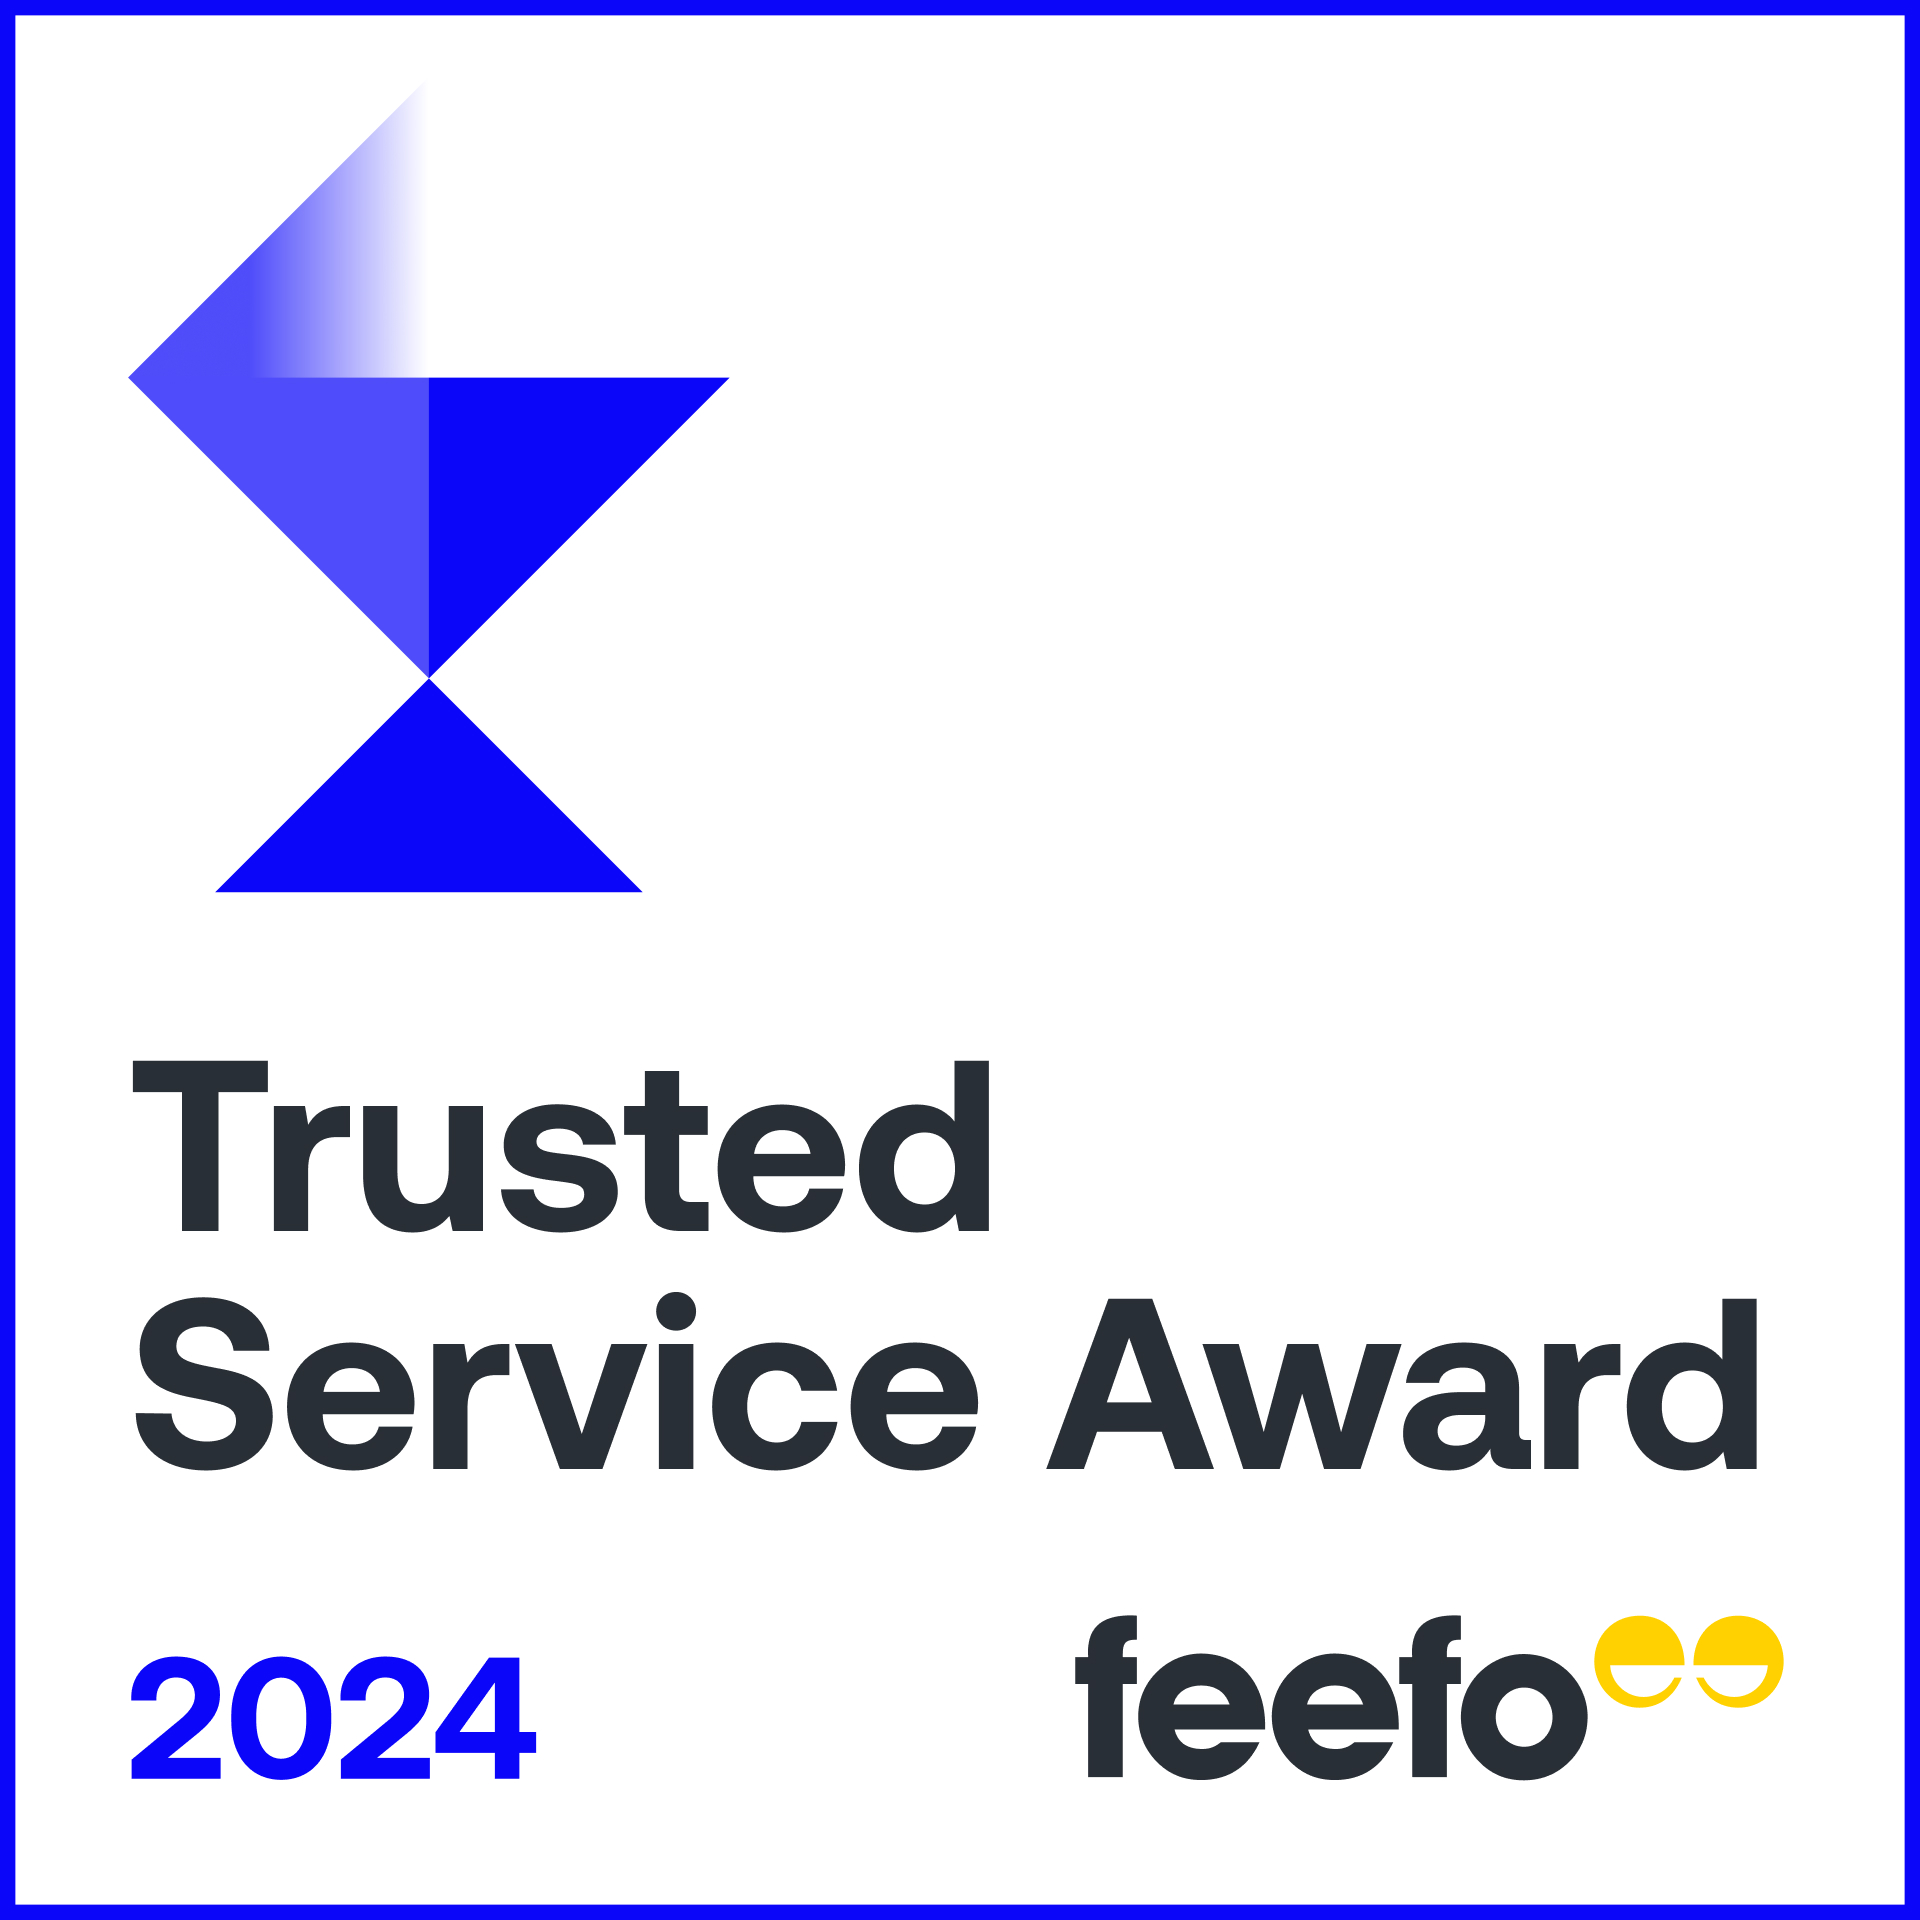 2024 Trusted Service Award badge from feefo.com